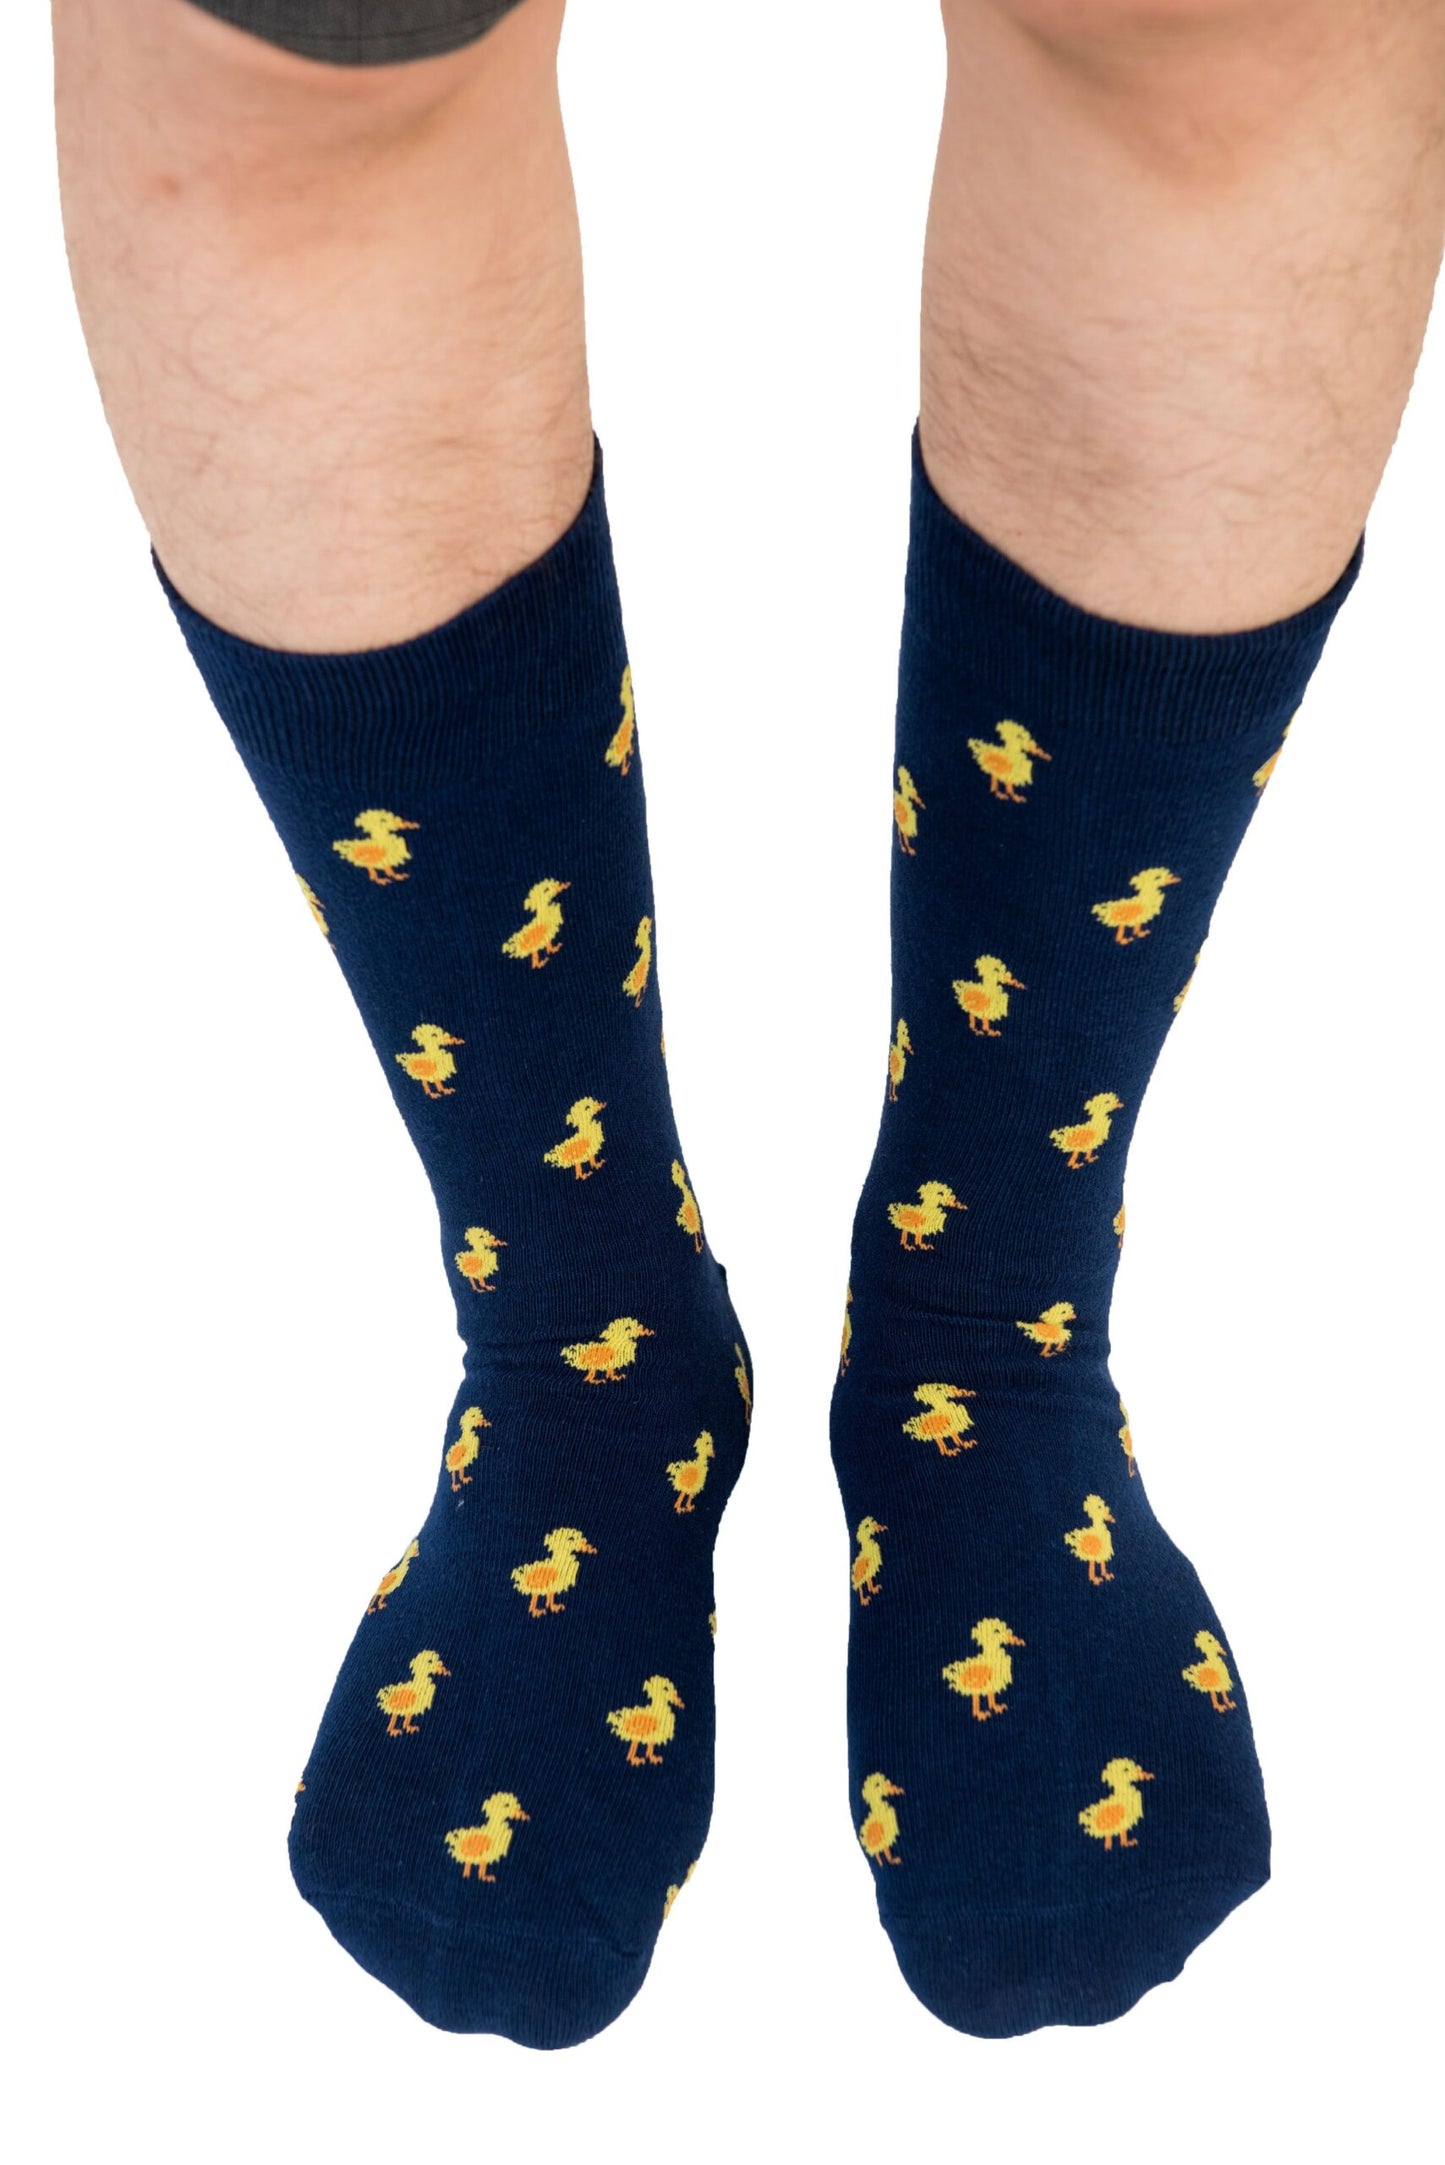 Yellow Duck Socks.